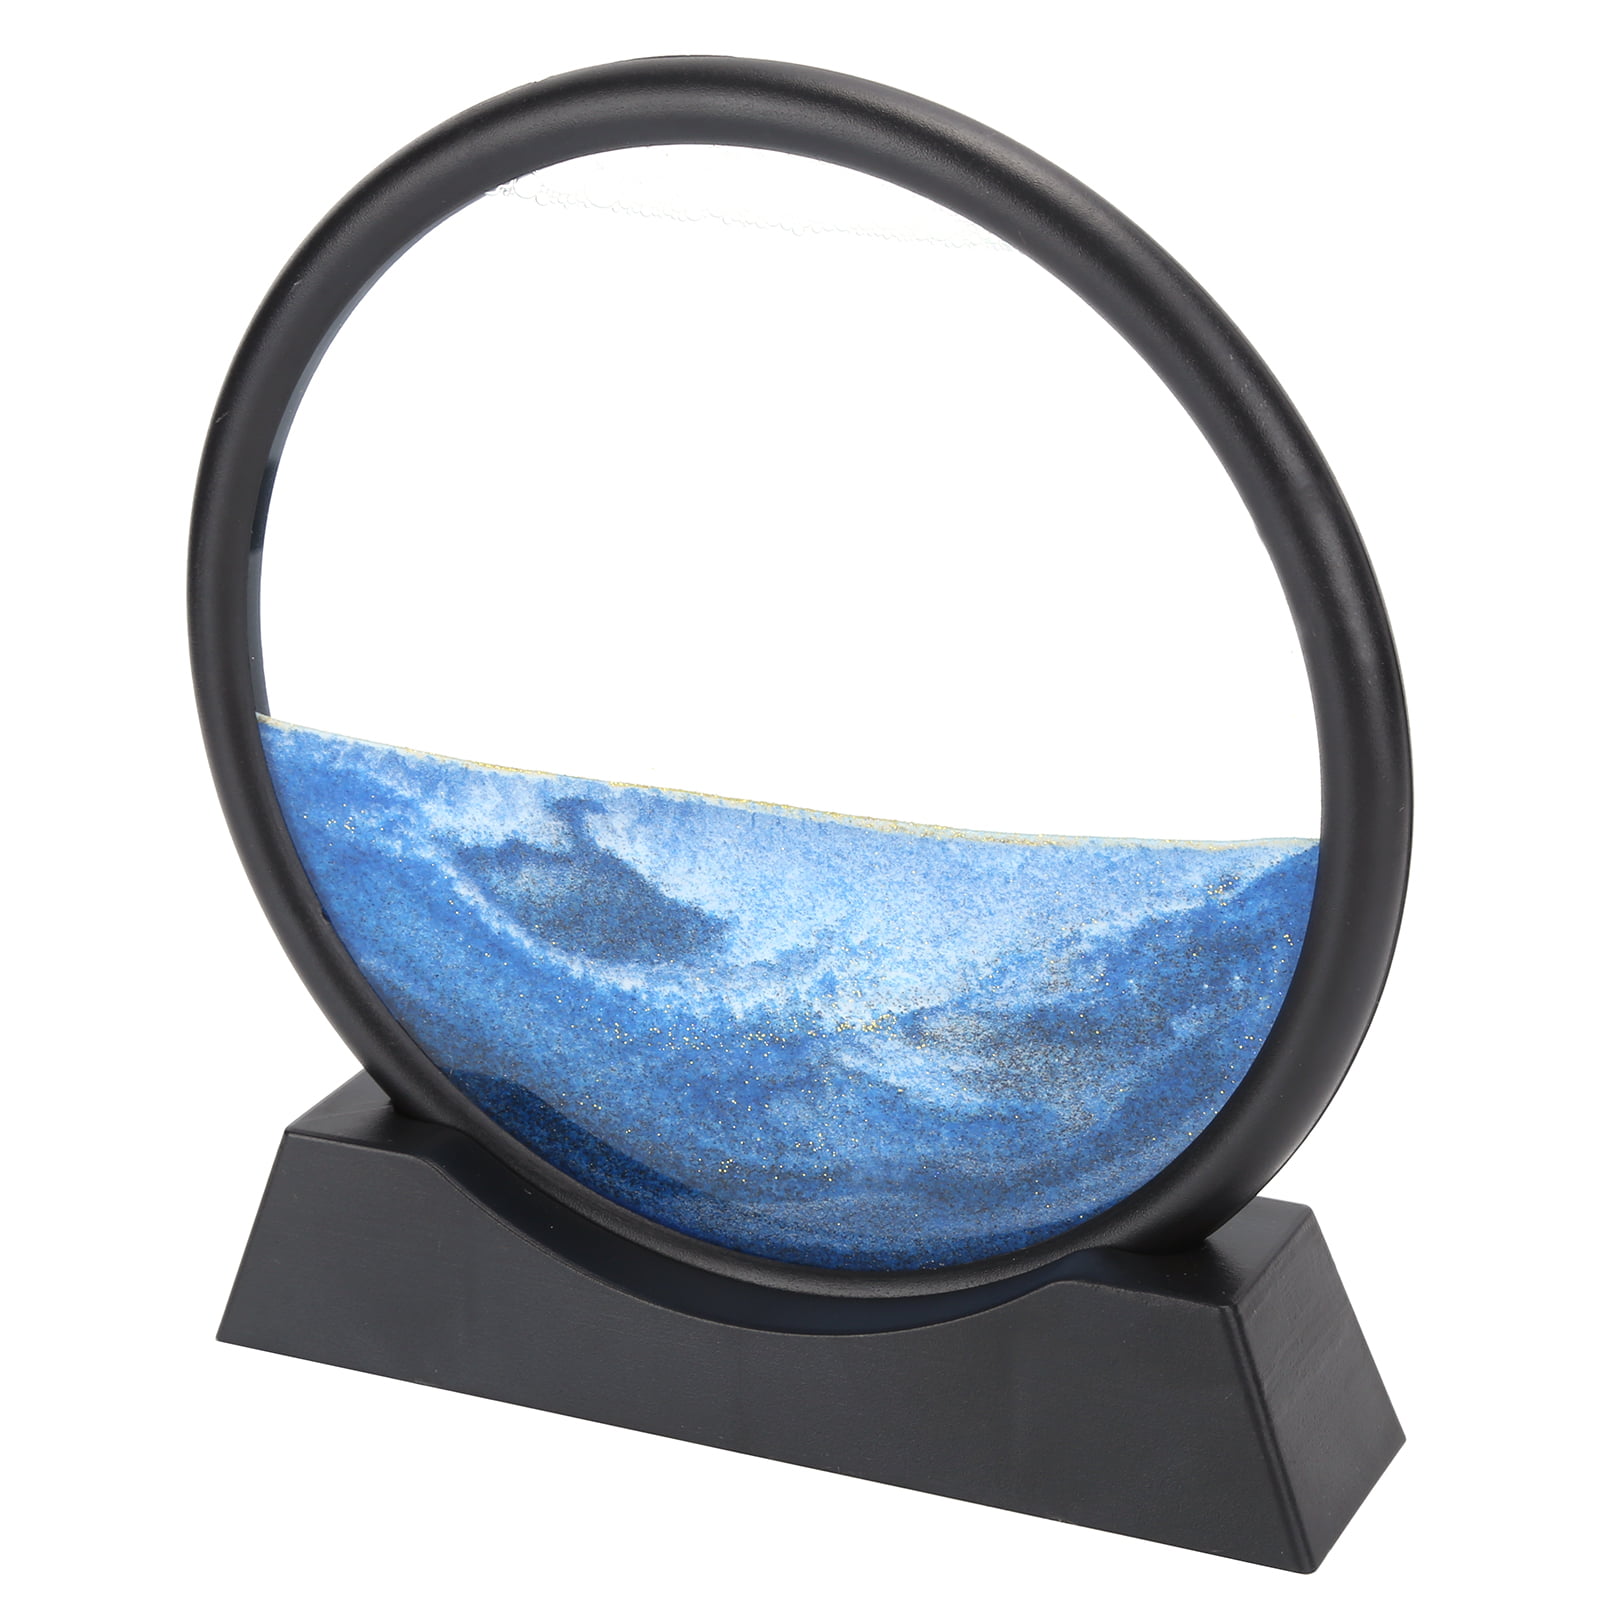 5''/7''/10'' Framed Moving Blue Sand Time Glass Picture Art Home Desk Decor Gift 